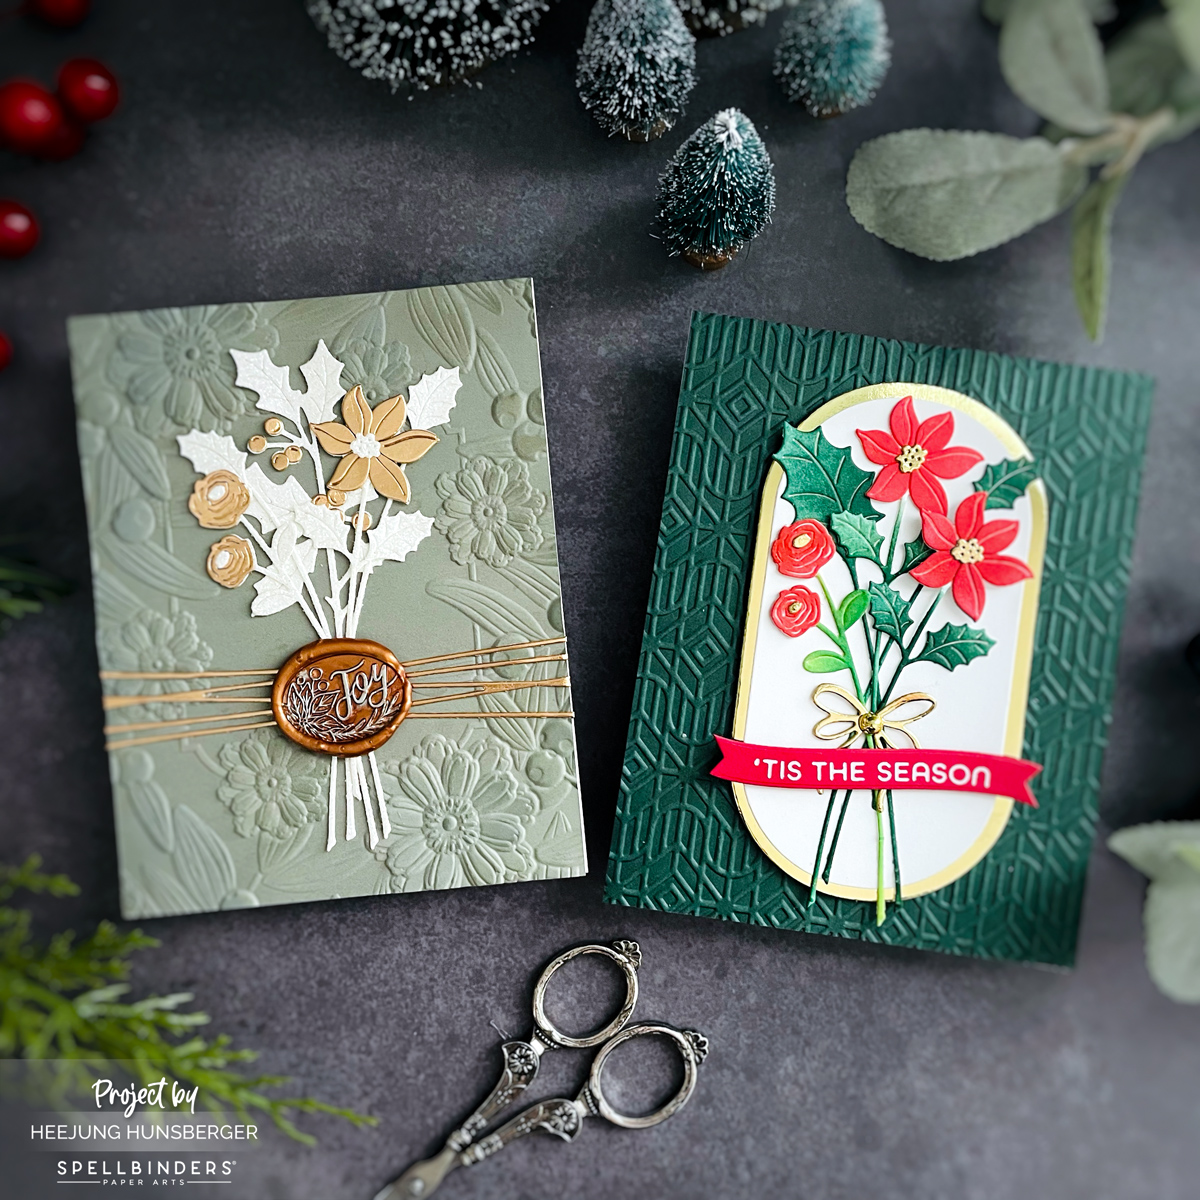 Spellbinders Sealed for Christmas Cards